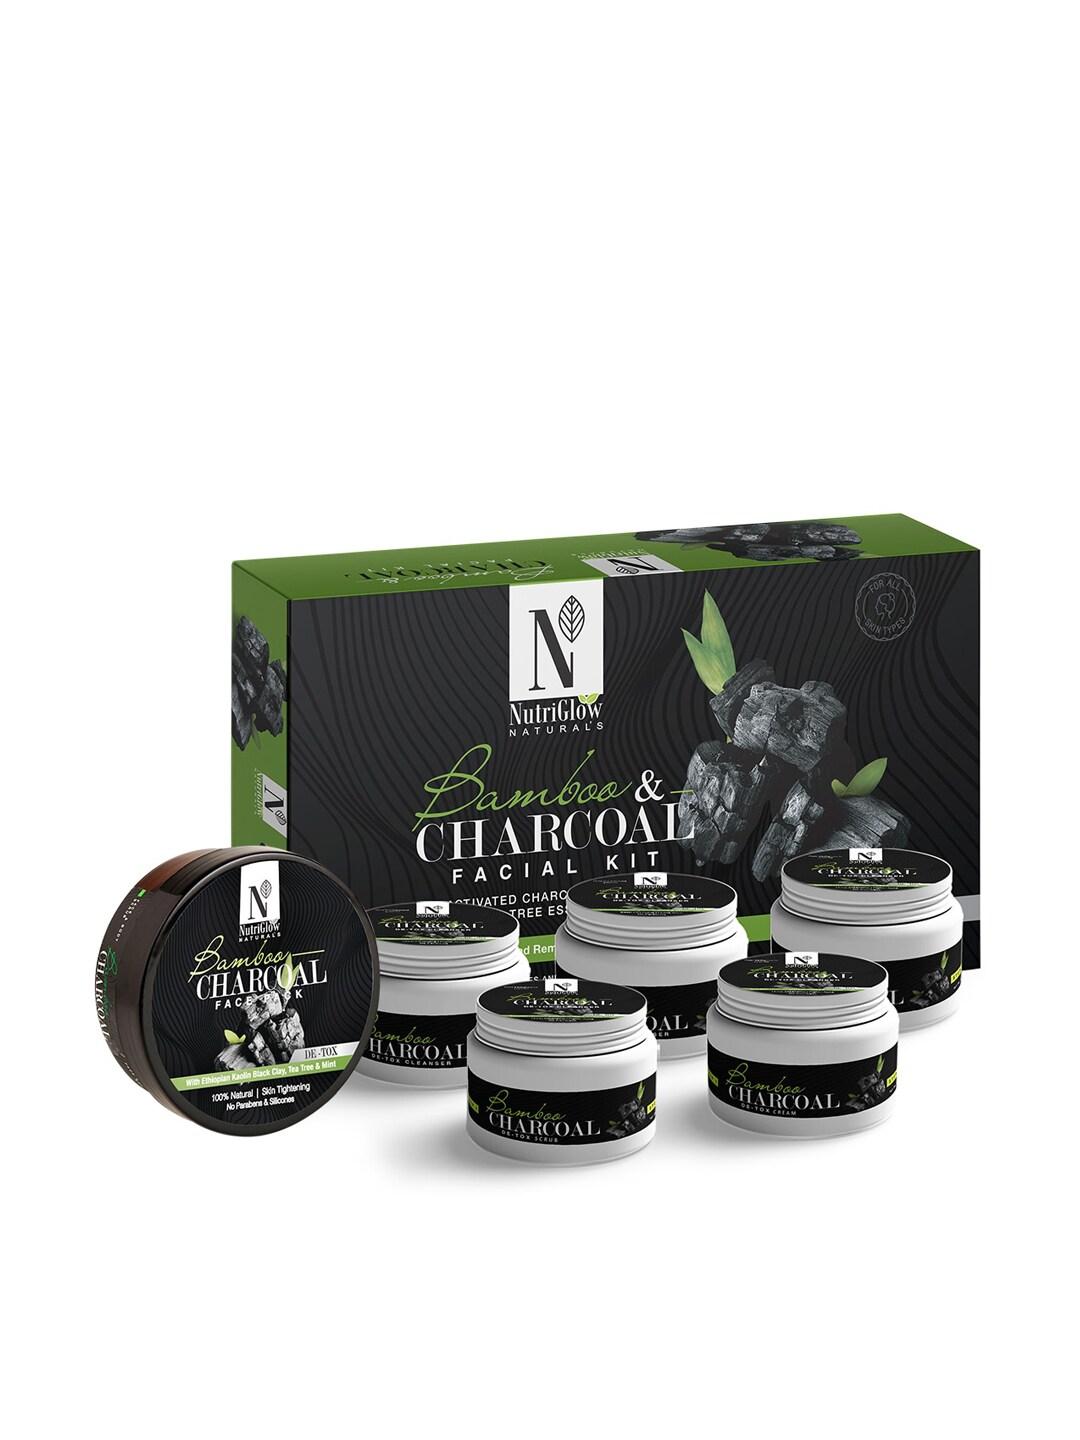 nutriglow-naturals-set-of-2-bamboo-&-charcoal-facial-kit-250g+10ml-&-face-pack-200g